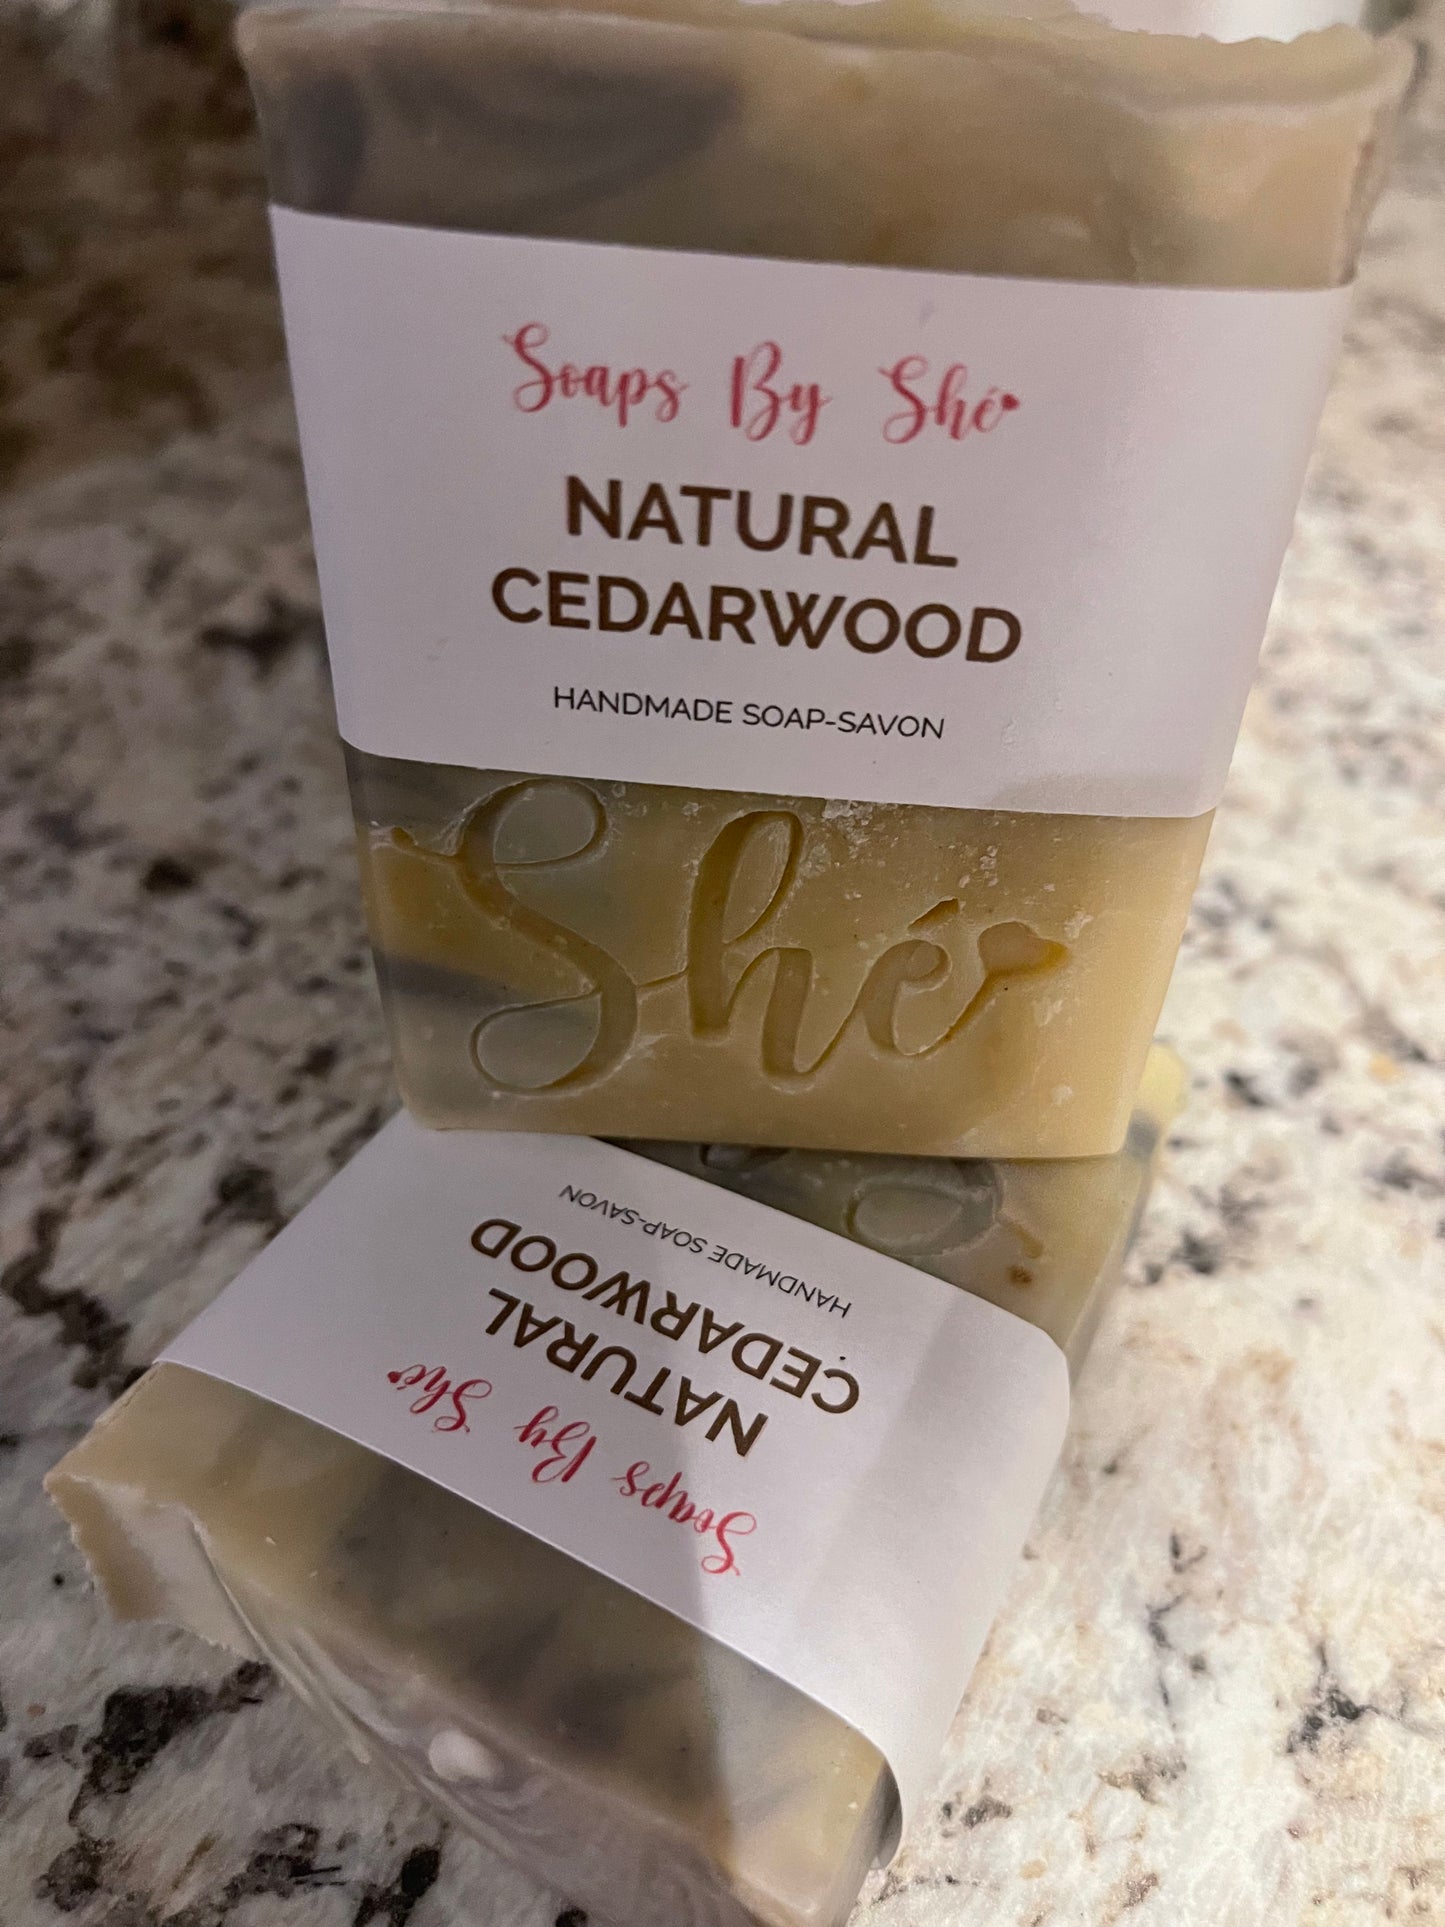 Natural Cedarwood Handmade Soap